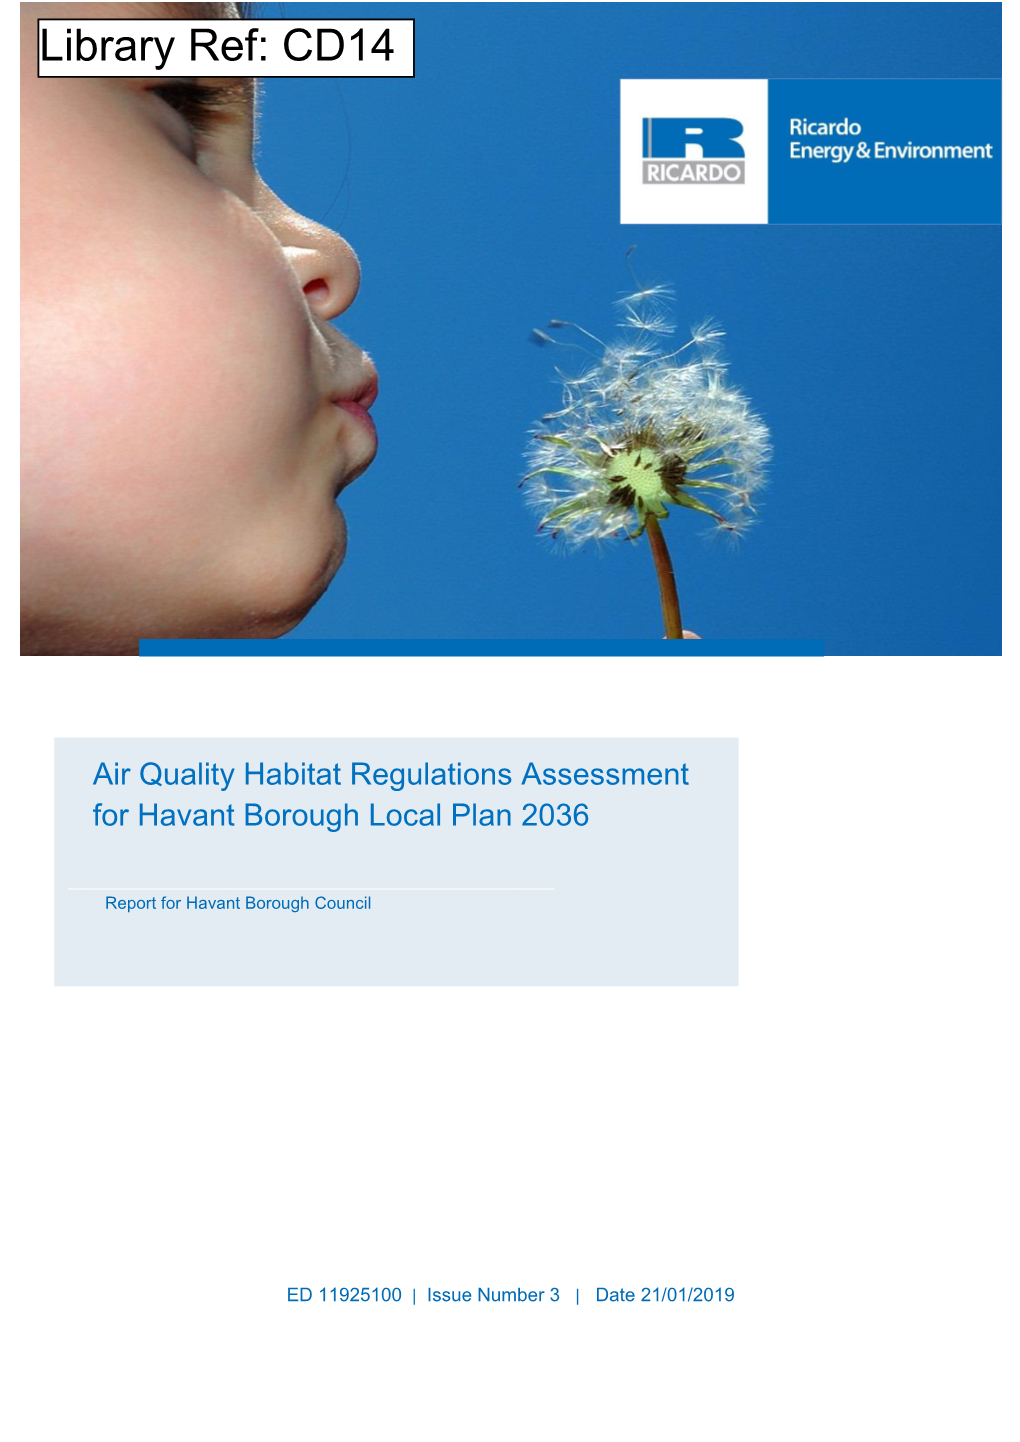 CD14 Air Quality Habitats Regulations Assessment